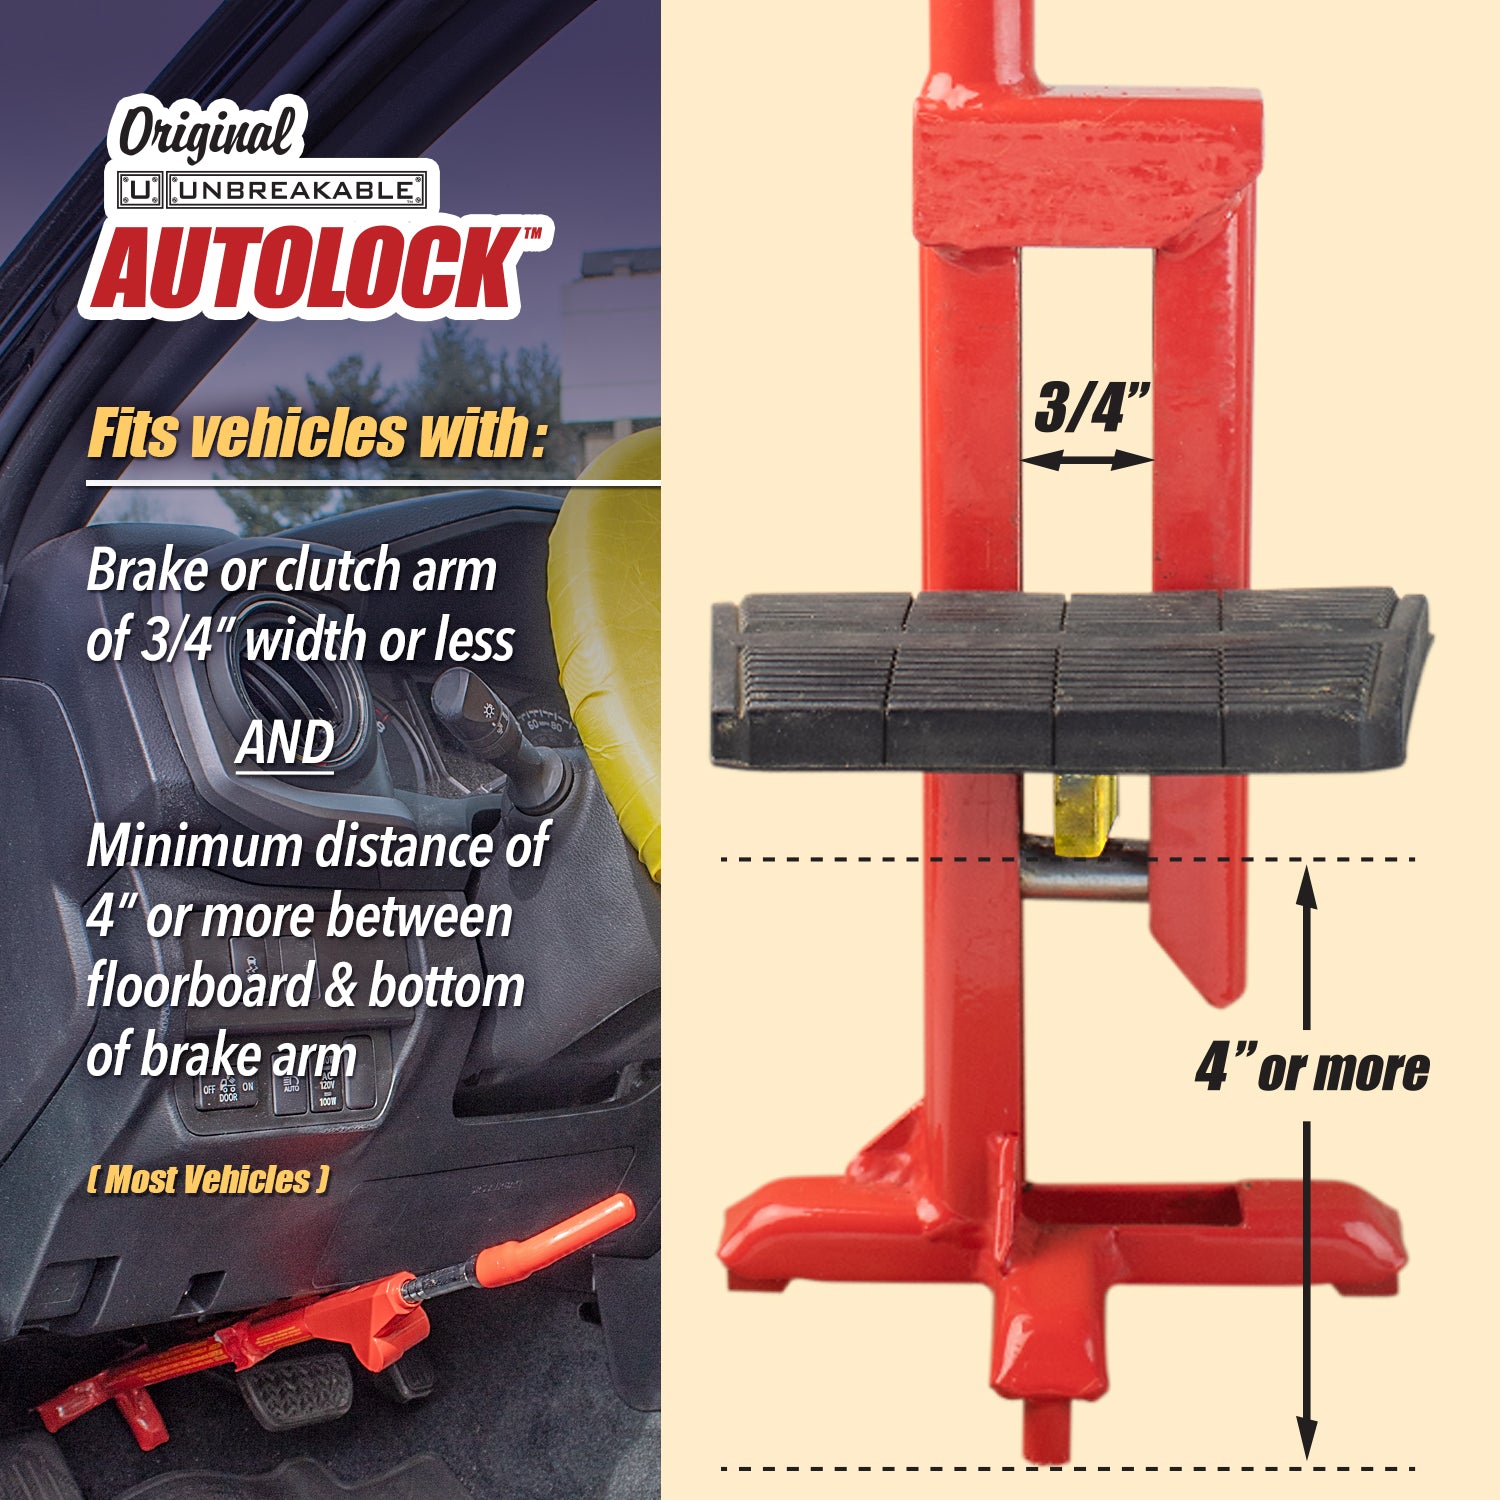 AutoLock - Original (Model #1440)